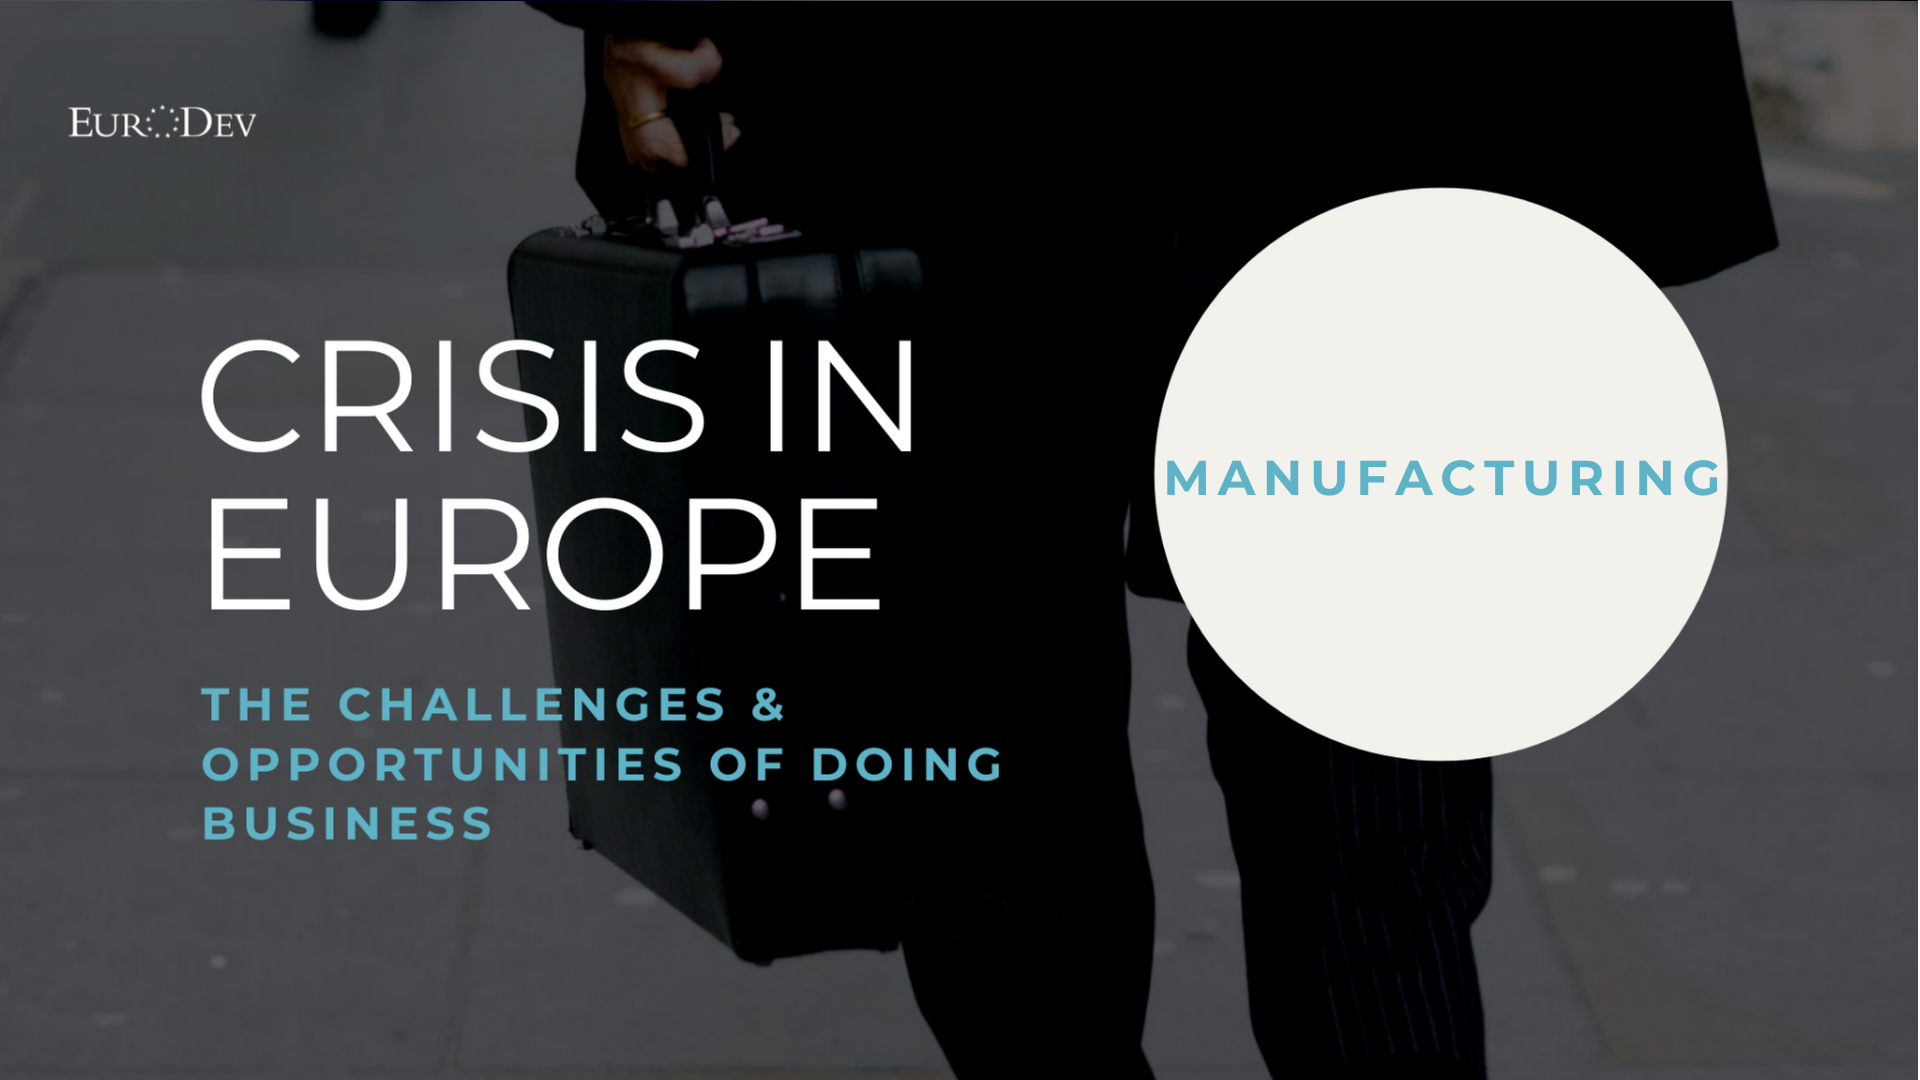 manufacturing in europe, european crisis, taxes in europe, CRISIS IN EUROPE, doing business in europe